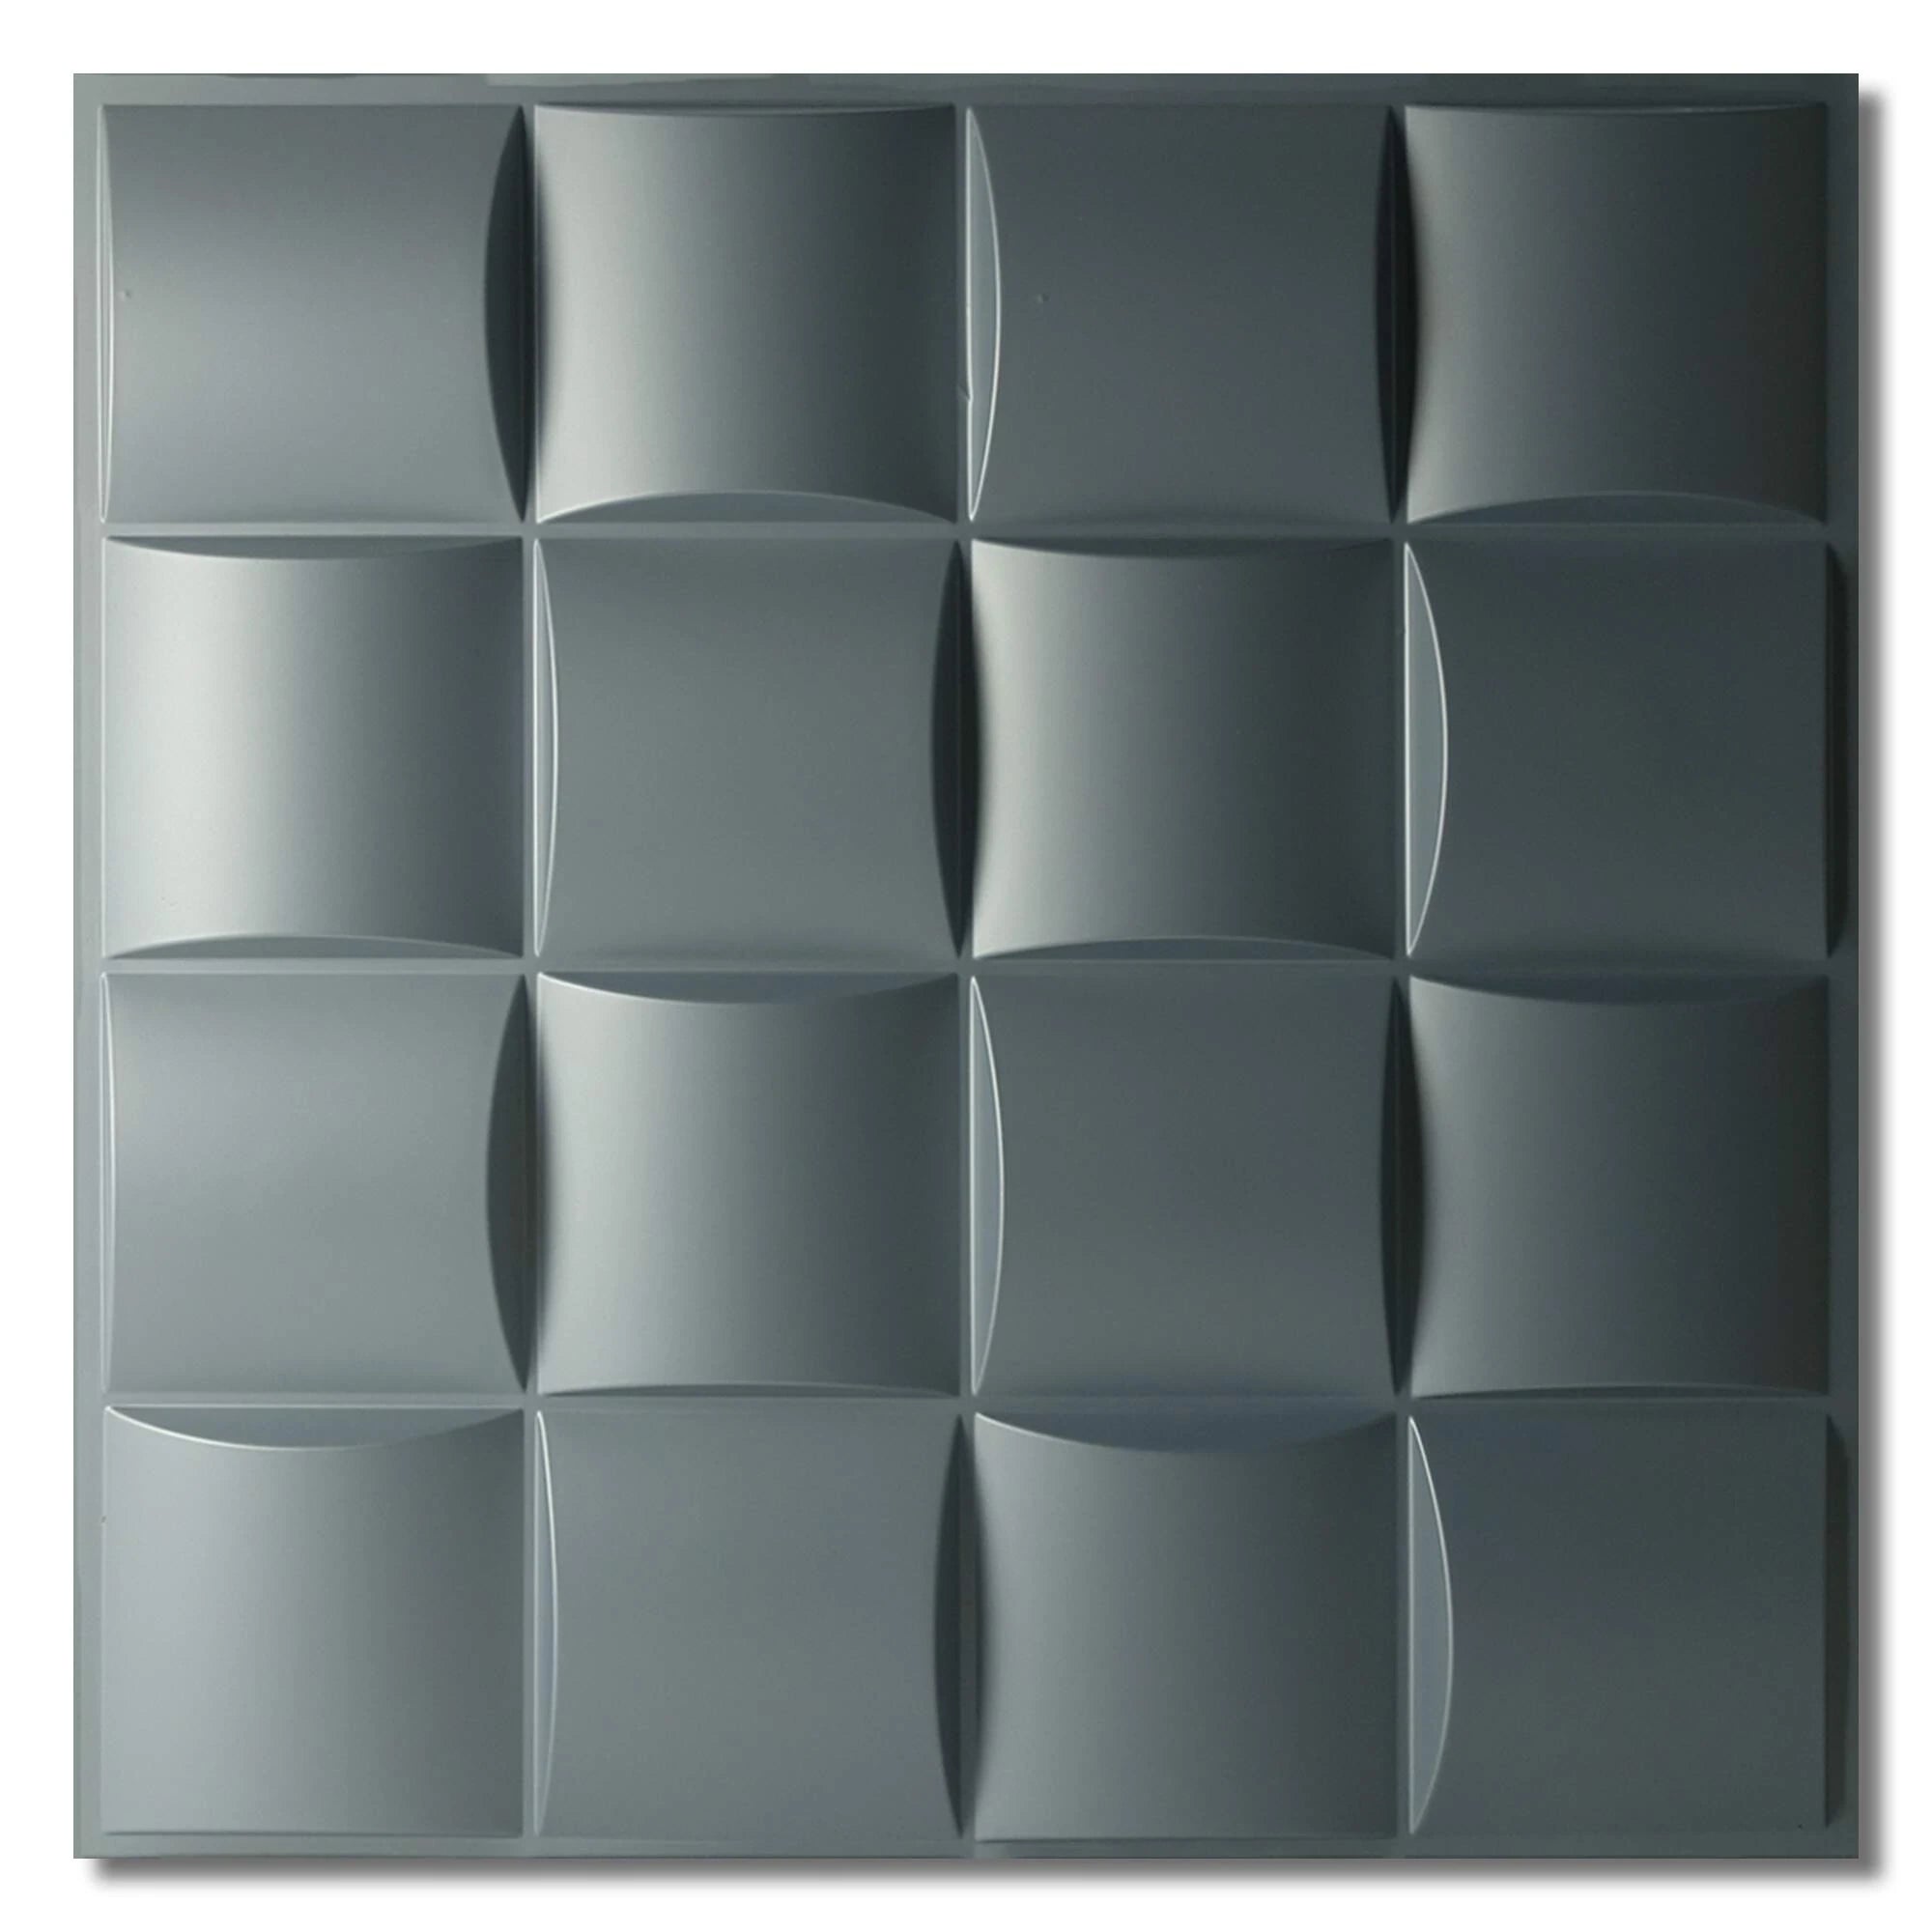 IVORI™ Curves Lux Wall Panel  (12 pc set)